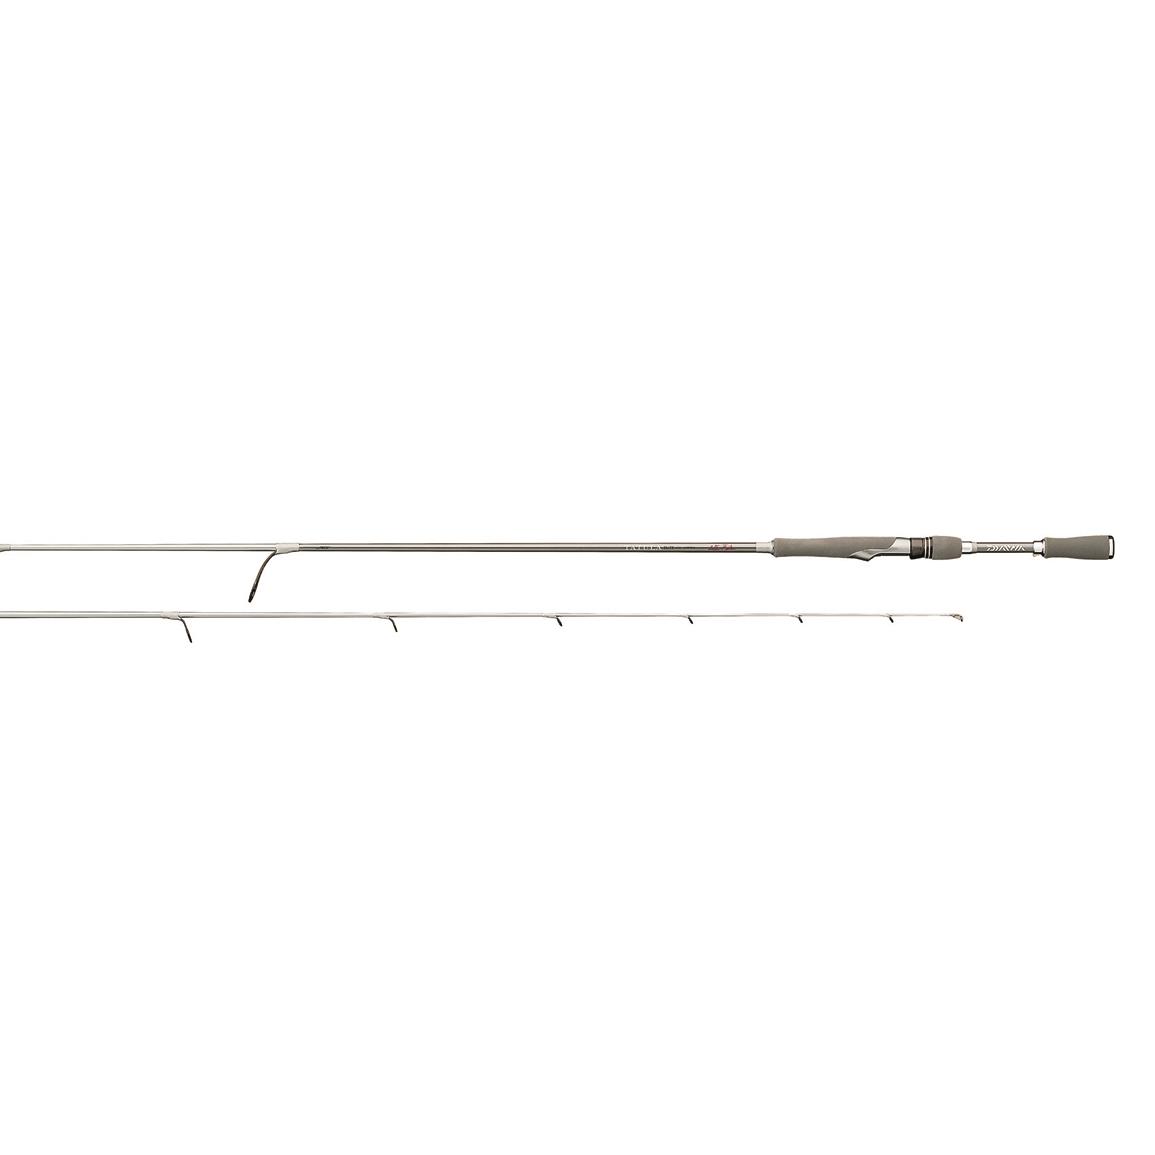 Daiwa Tatula Elite AGS Versatile Spinning Rod, 7'4" Length, Medium Power, Fast Action